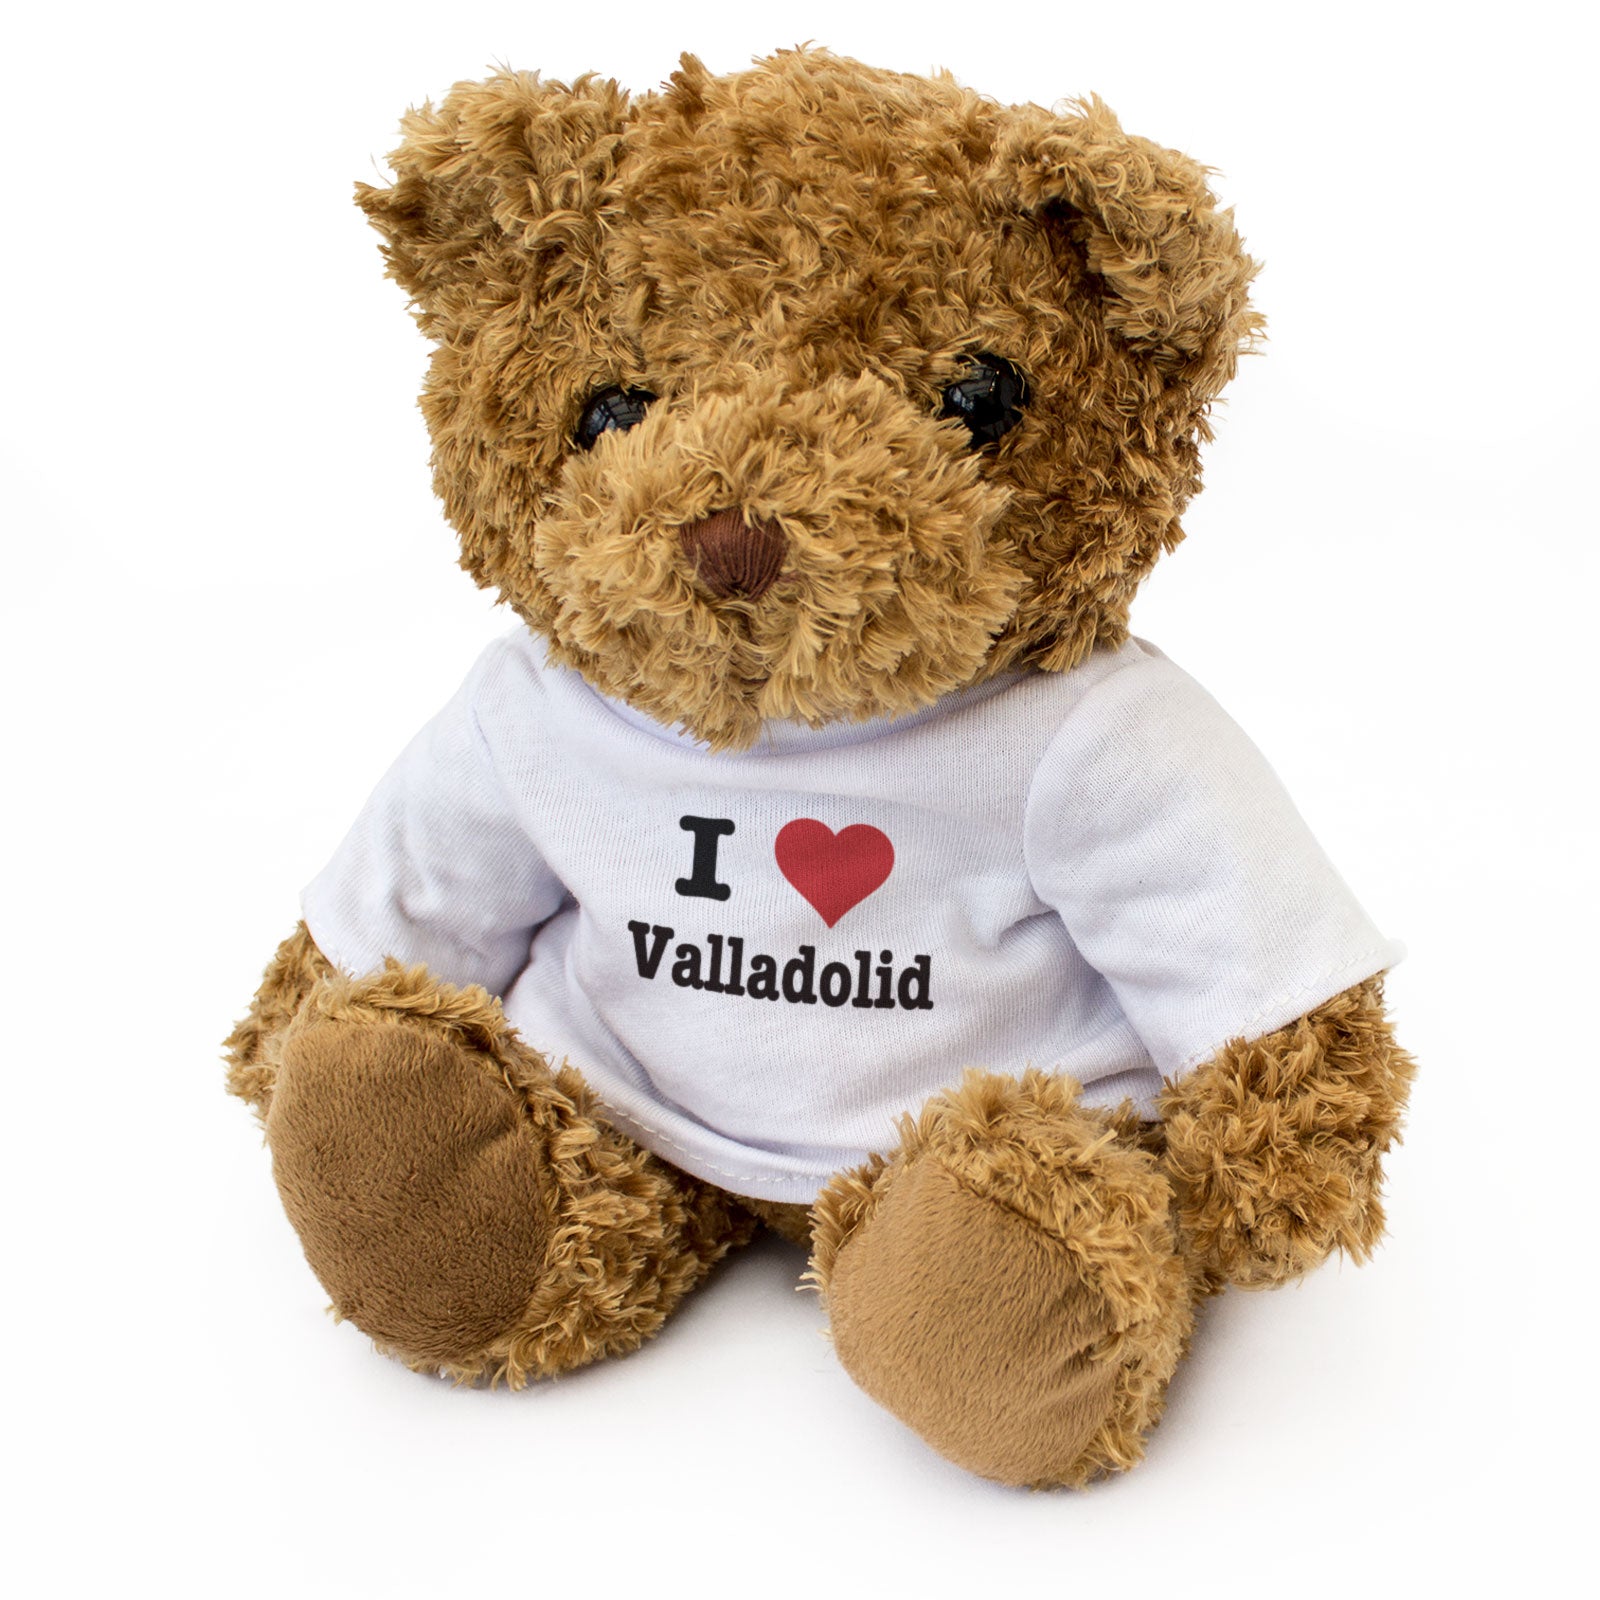 I Love Valladolid - Teddy Bear